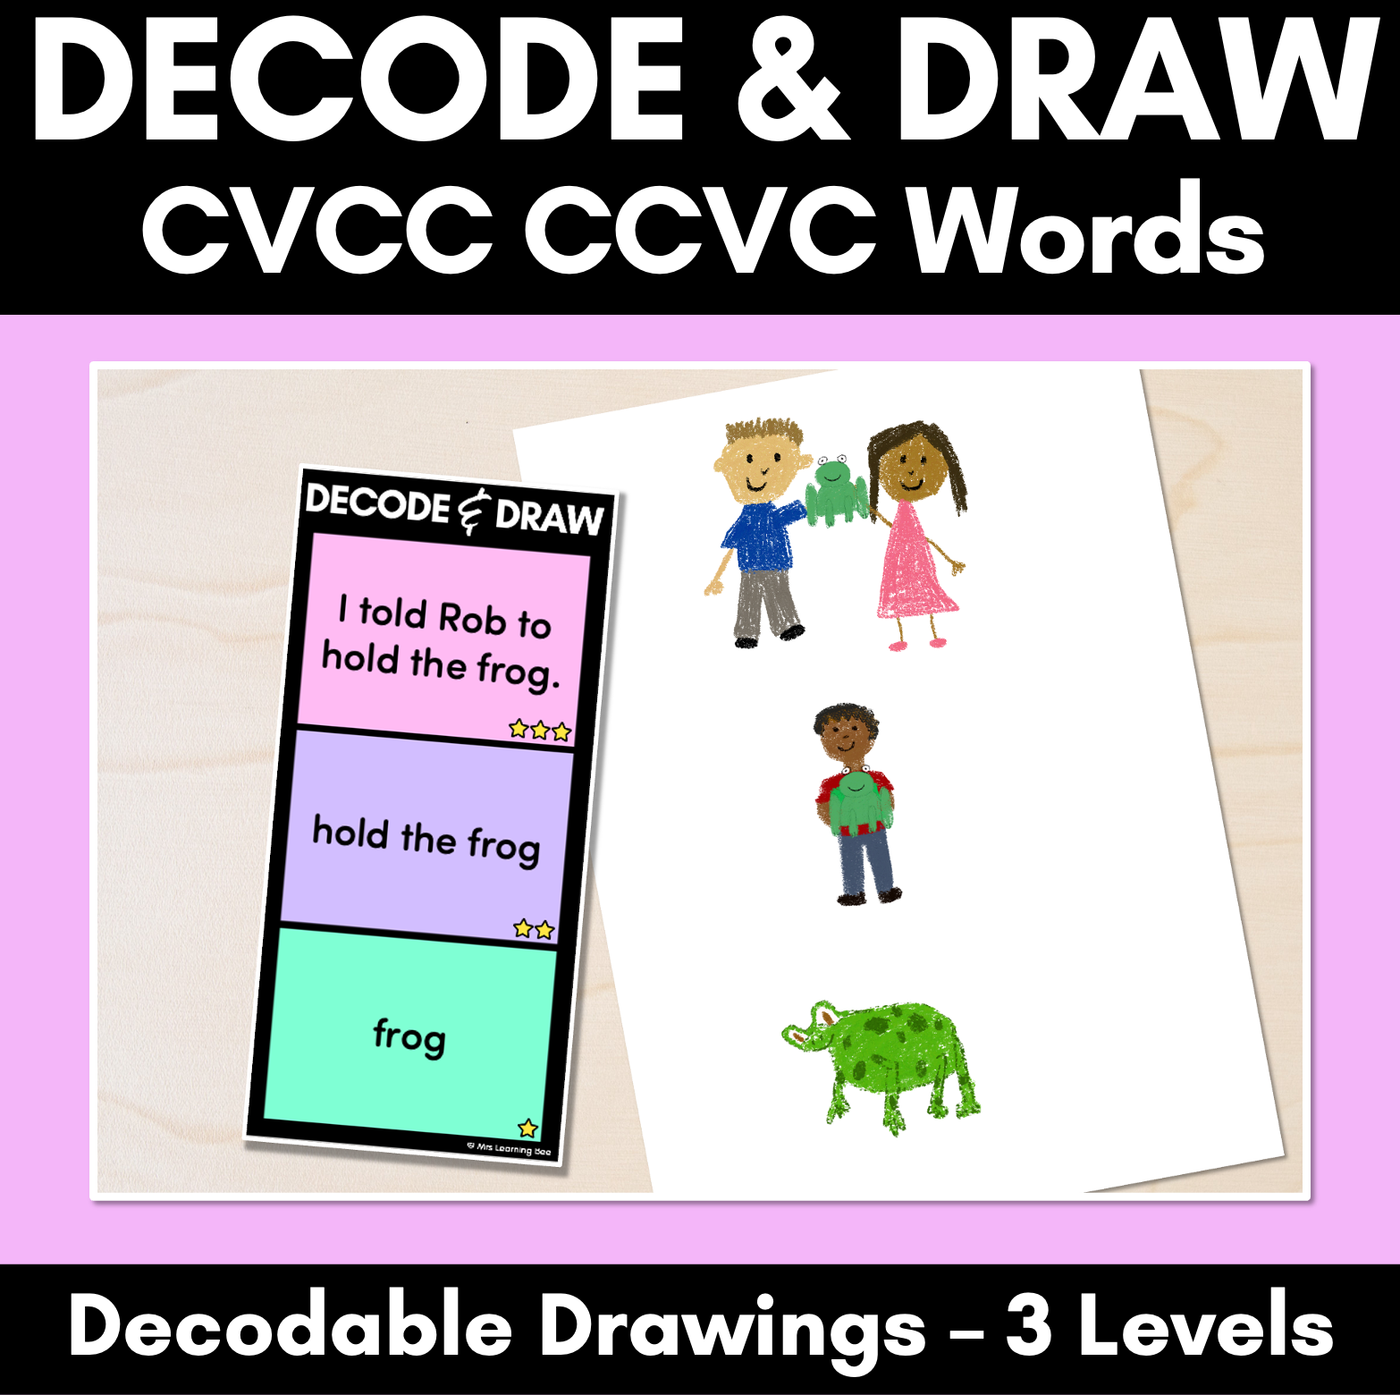 DECODE & DRAW - CVCC & CCVC Words - Decodable Drawing Phonics Task Cards